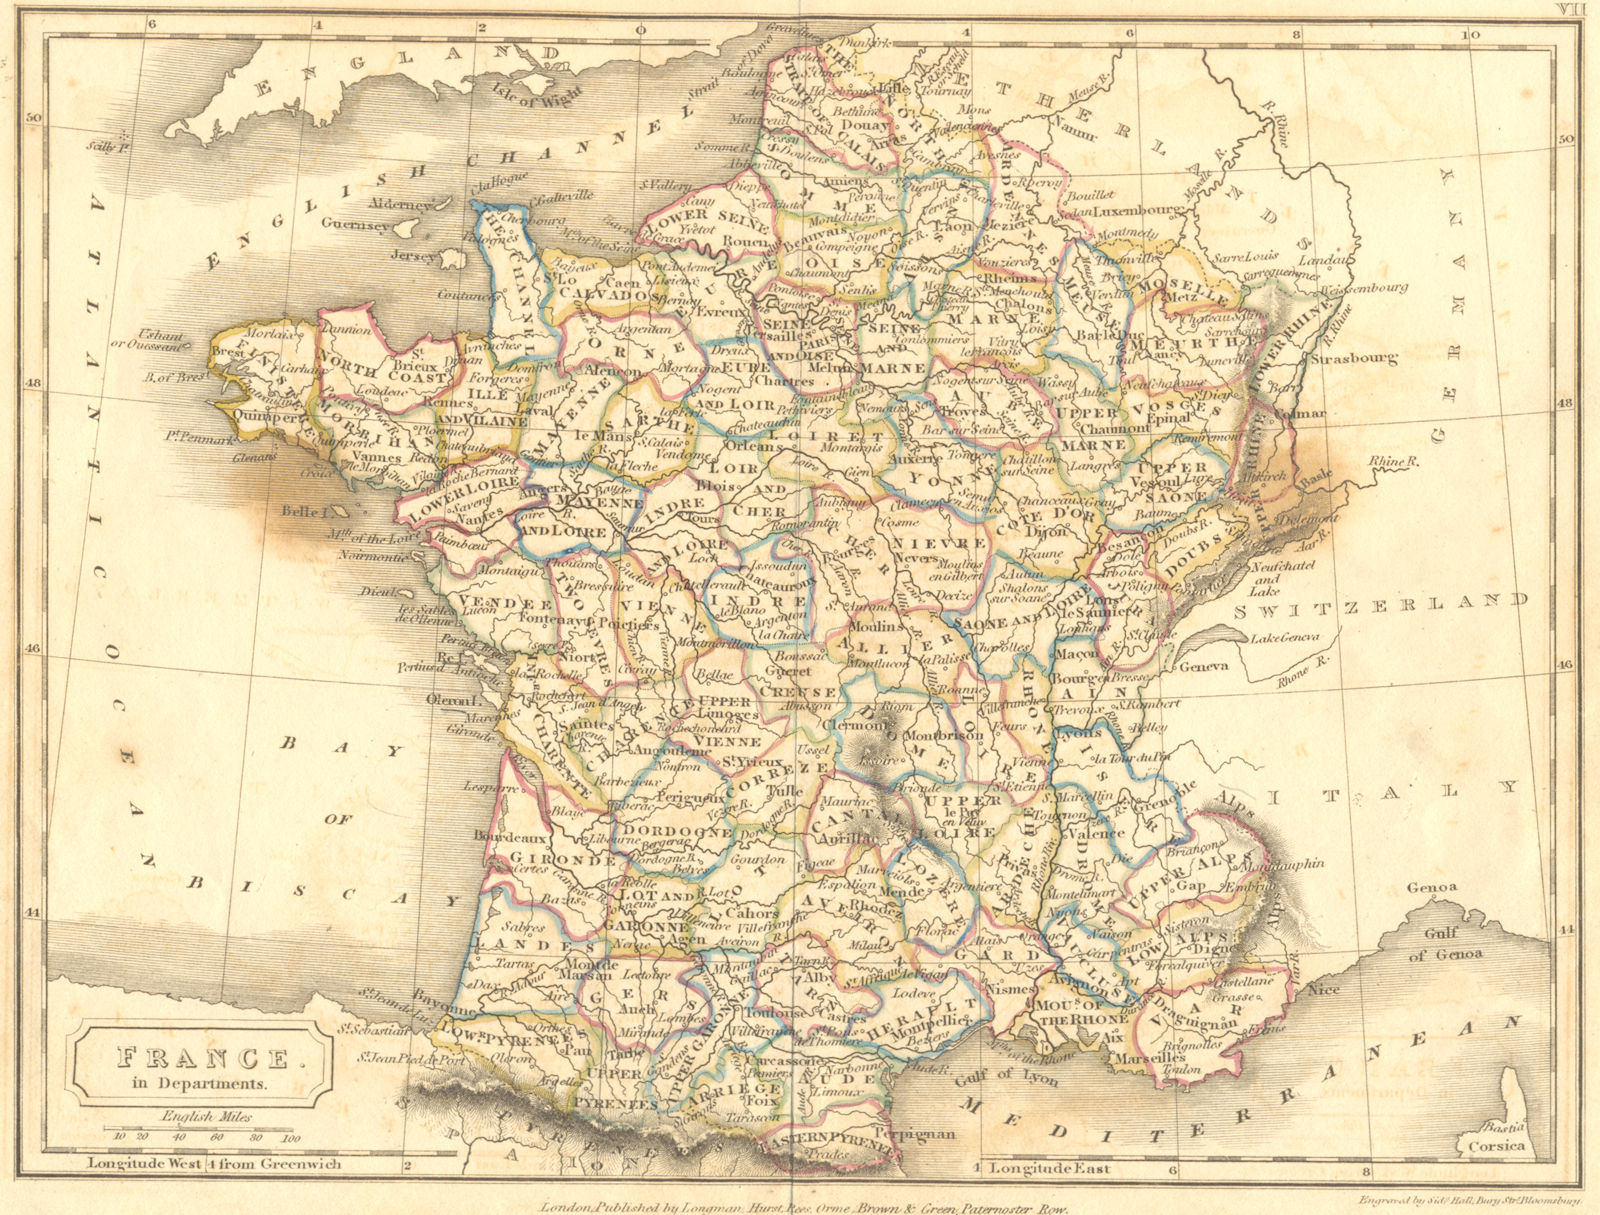 FRANCE. Departments. Sidney Hall 1850 old antique vintage map plan chart